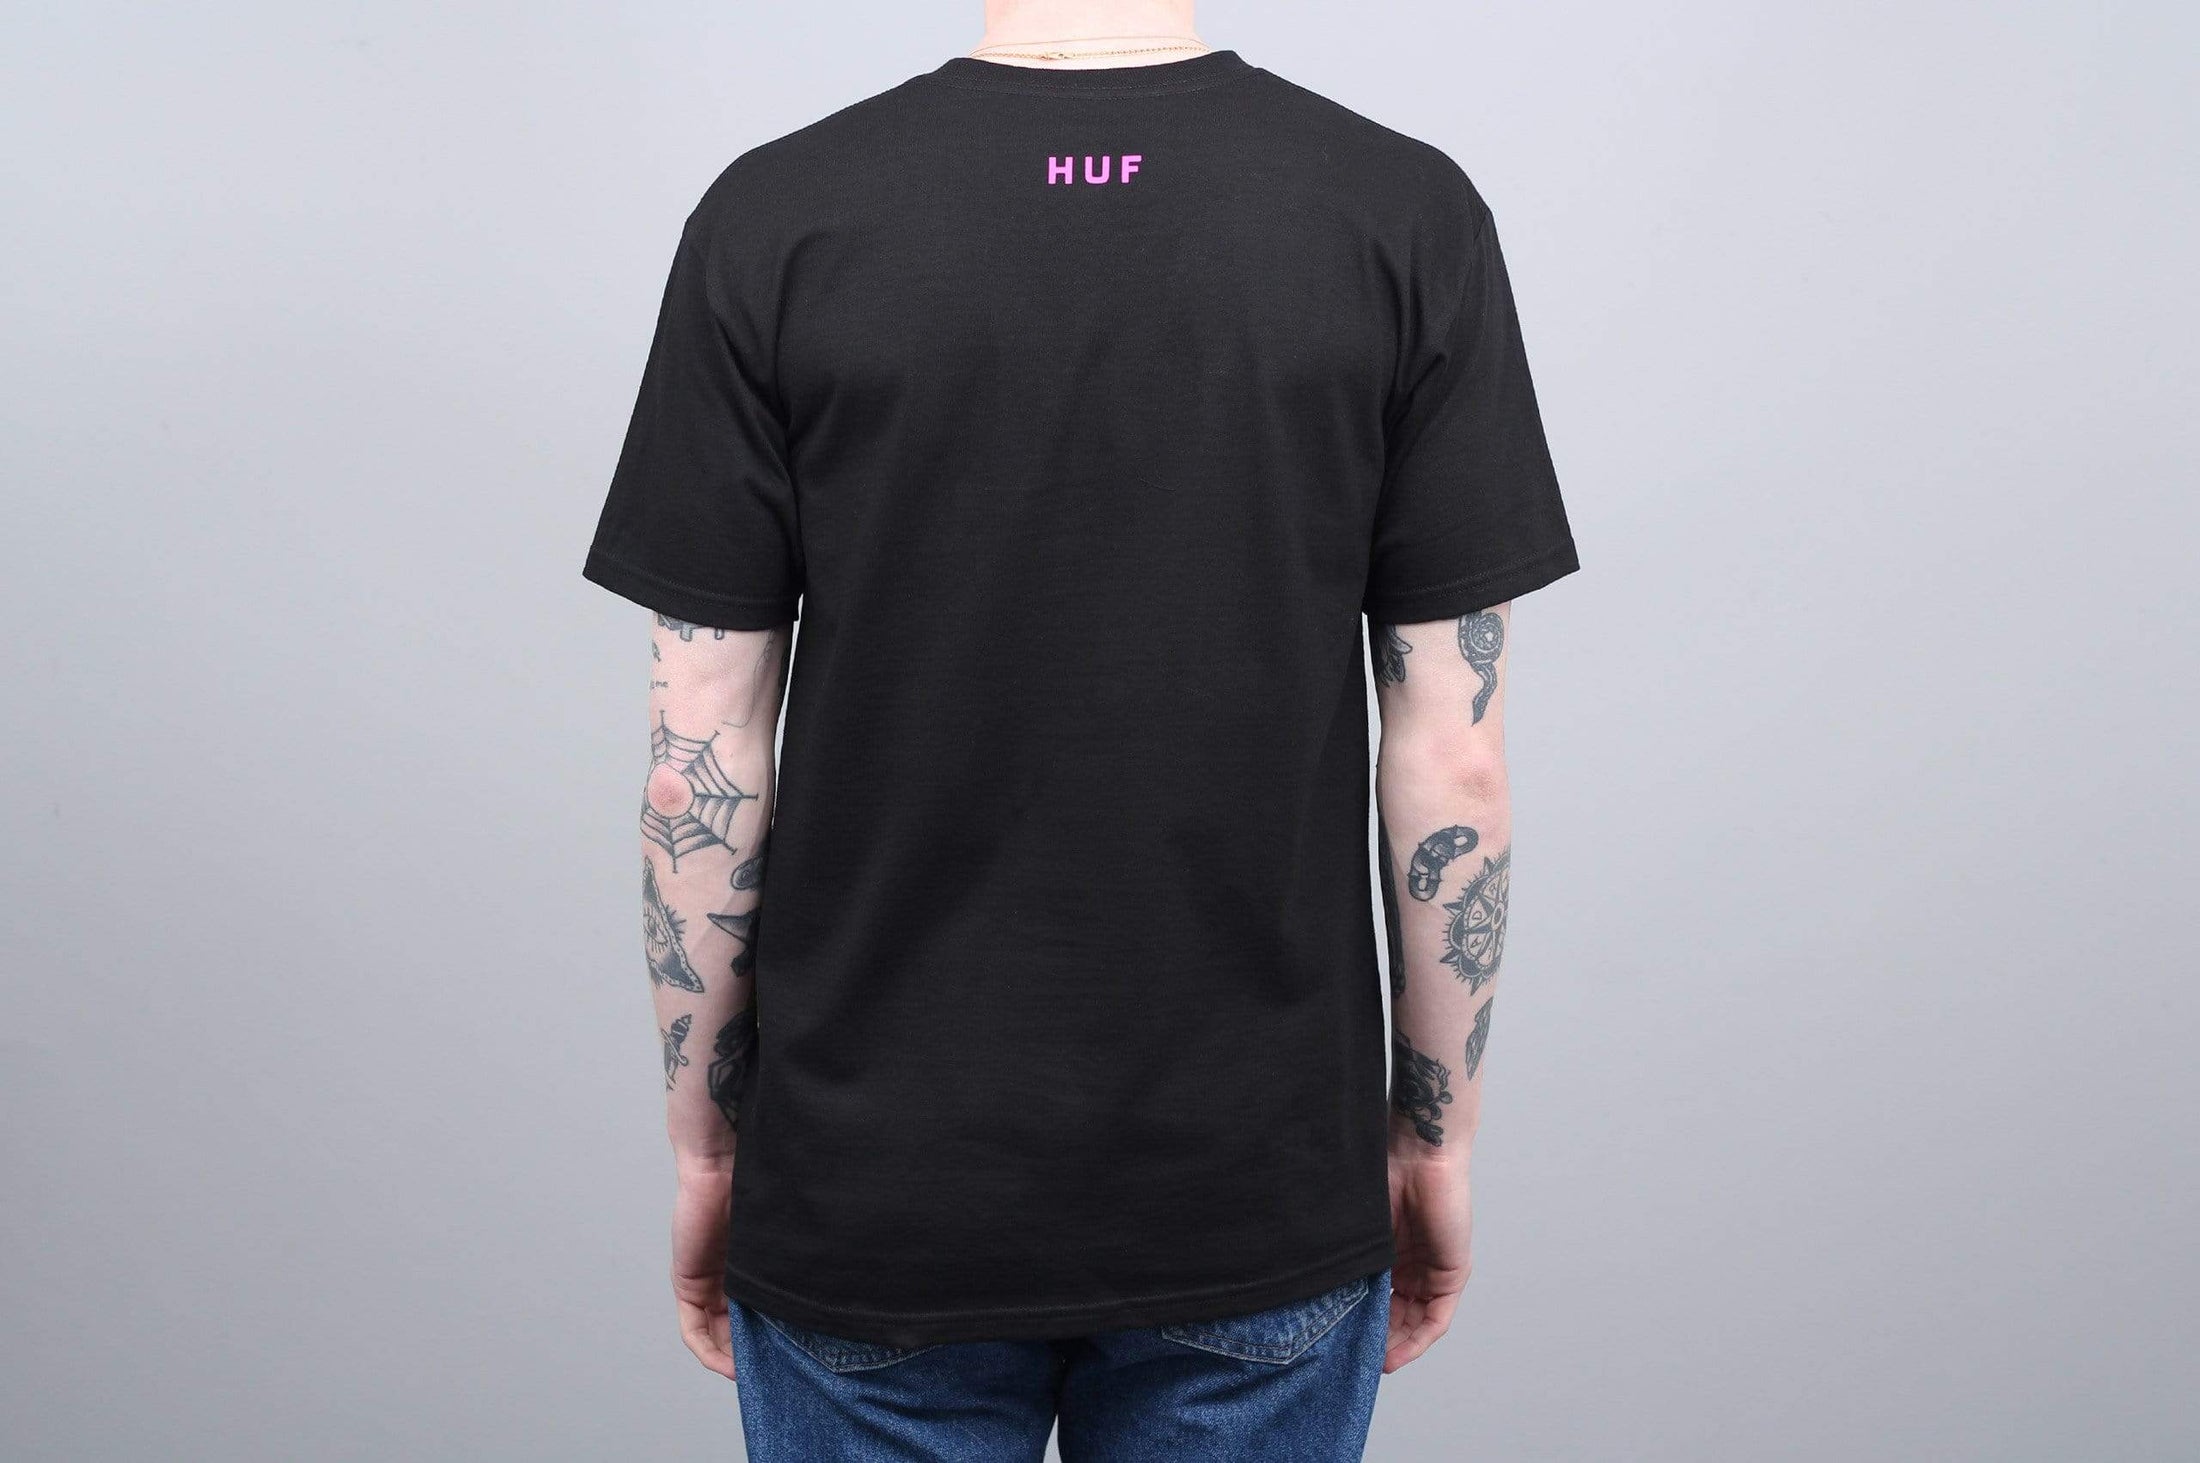 HUF Channel J T-Shirt Black